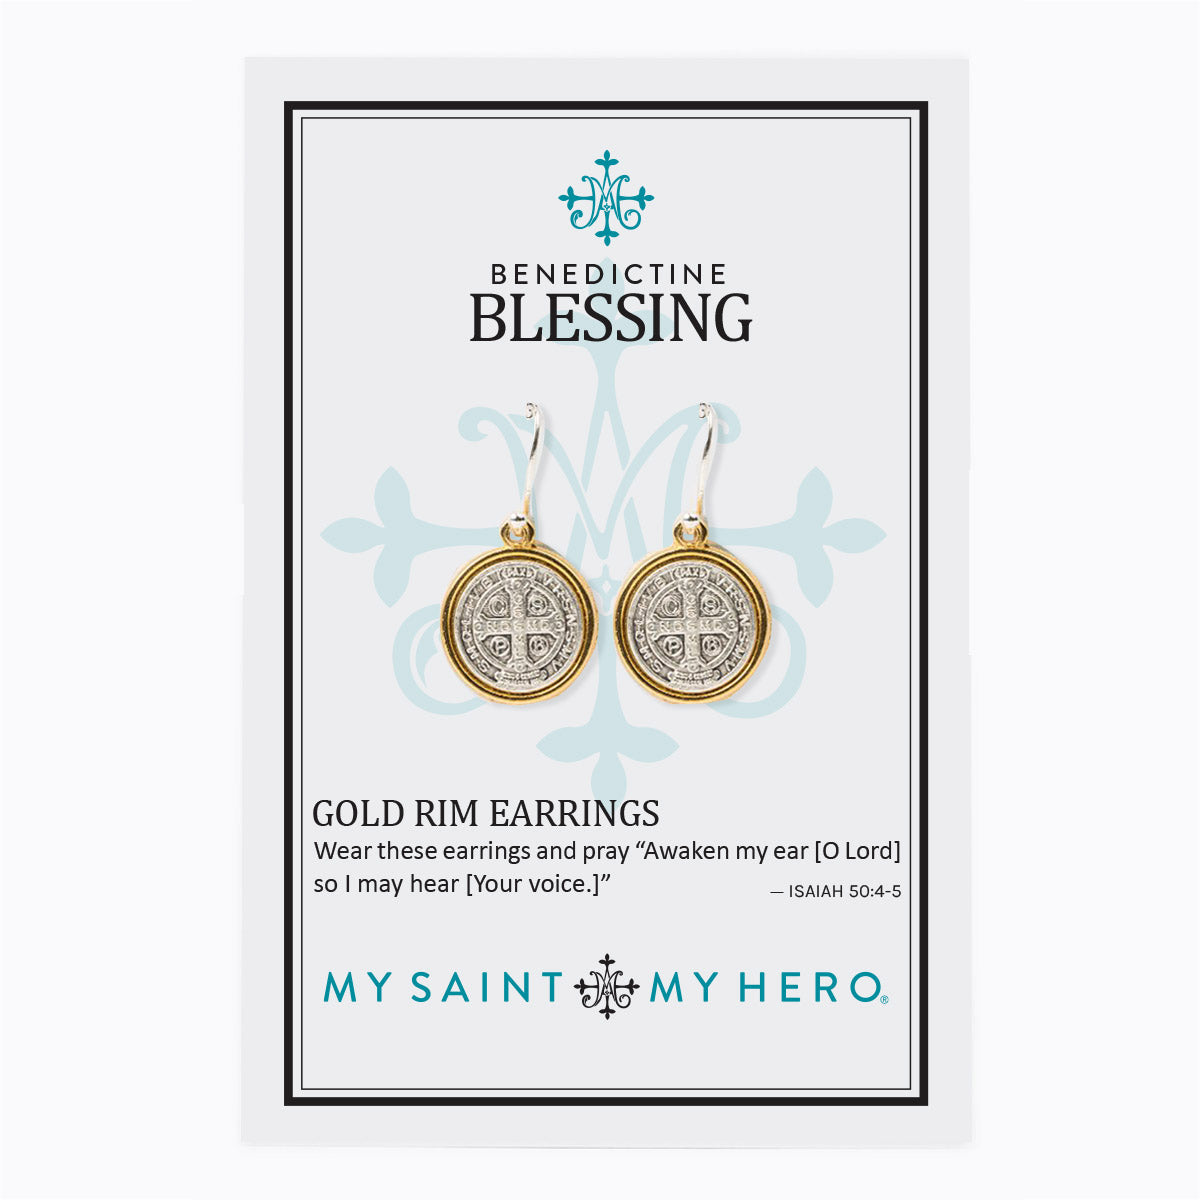 Benedictine Blessing Gold Rim Earrings by My Saint My Hero